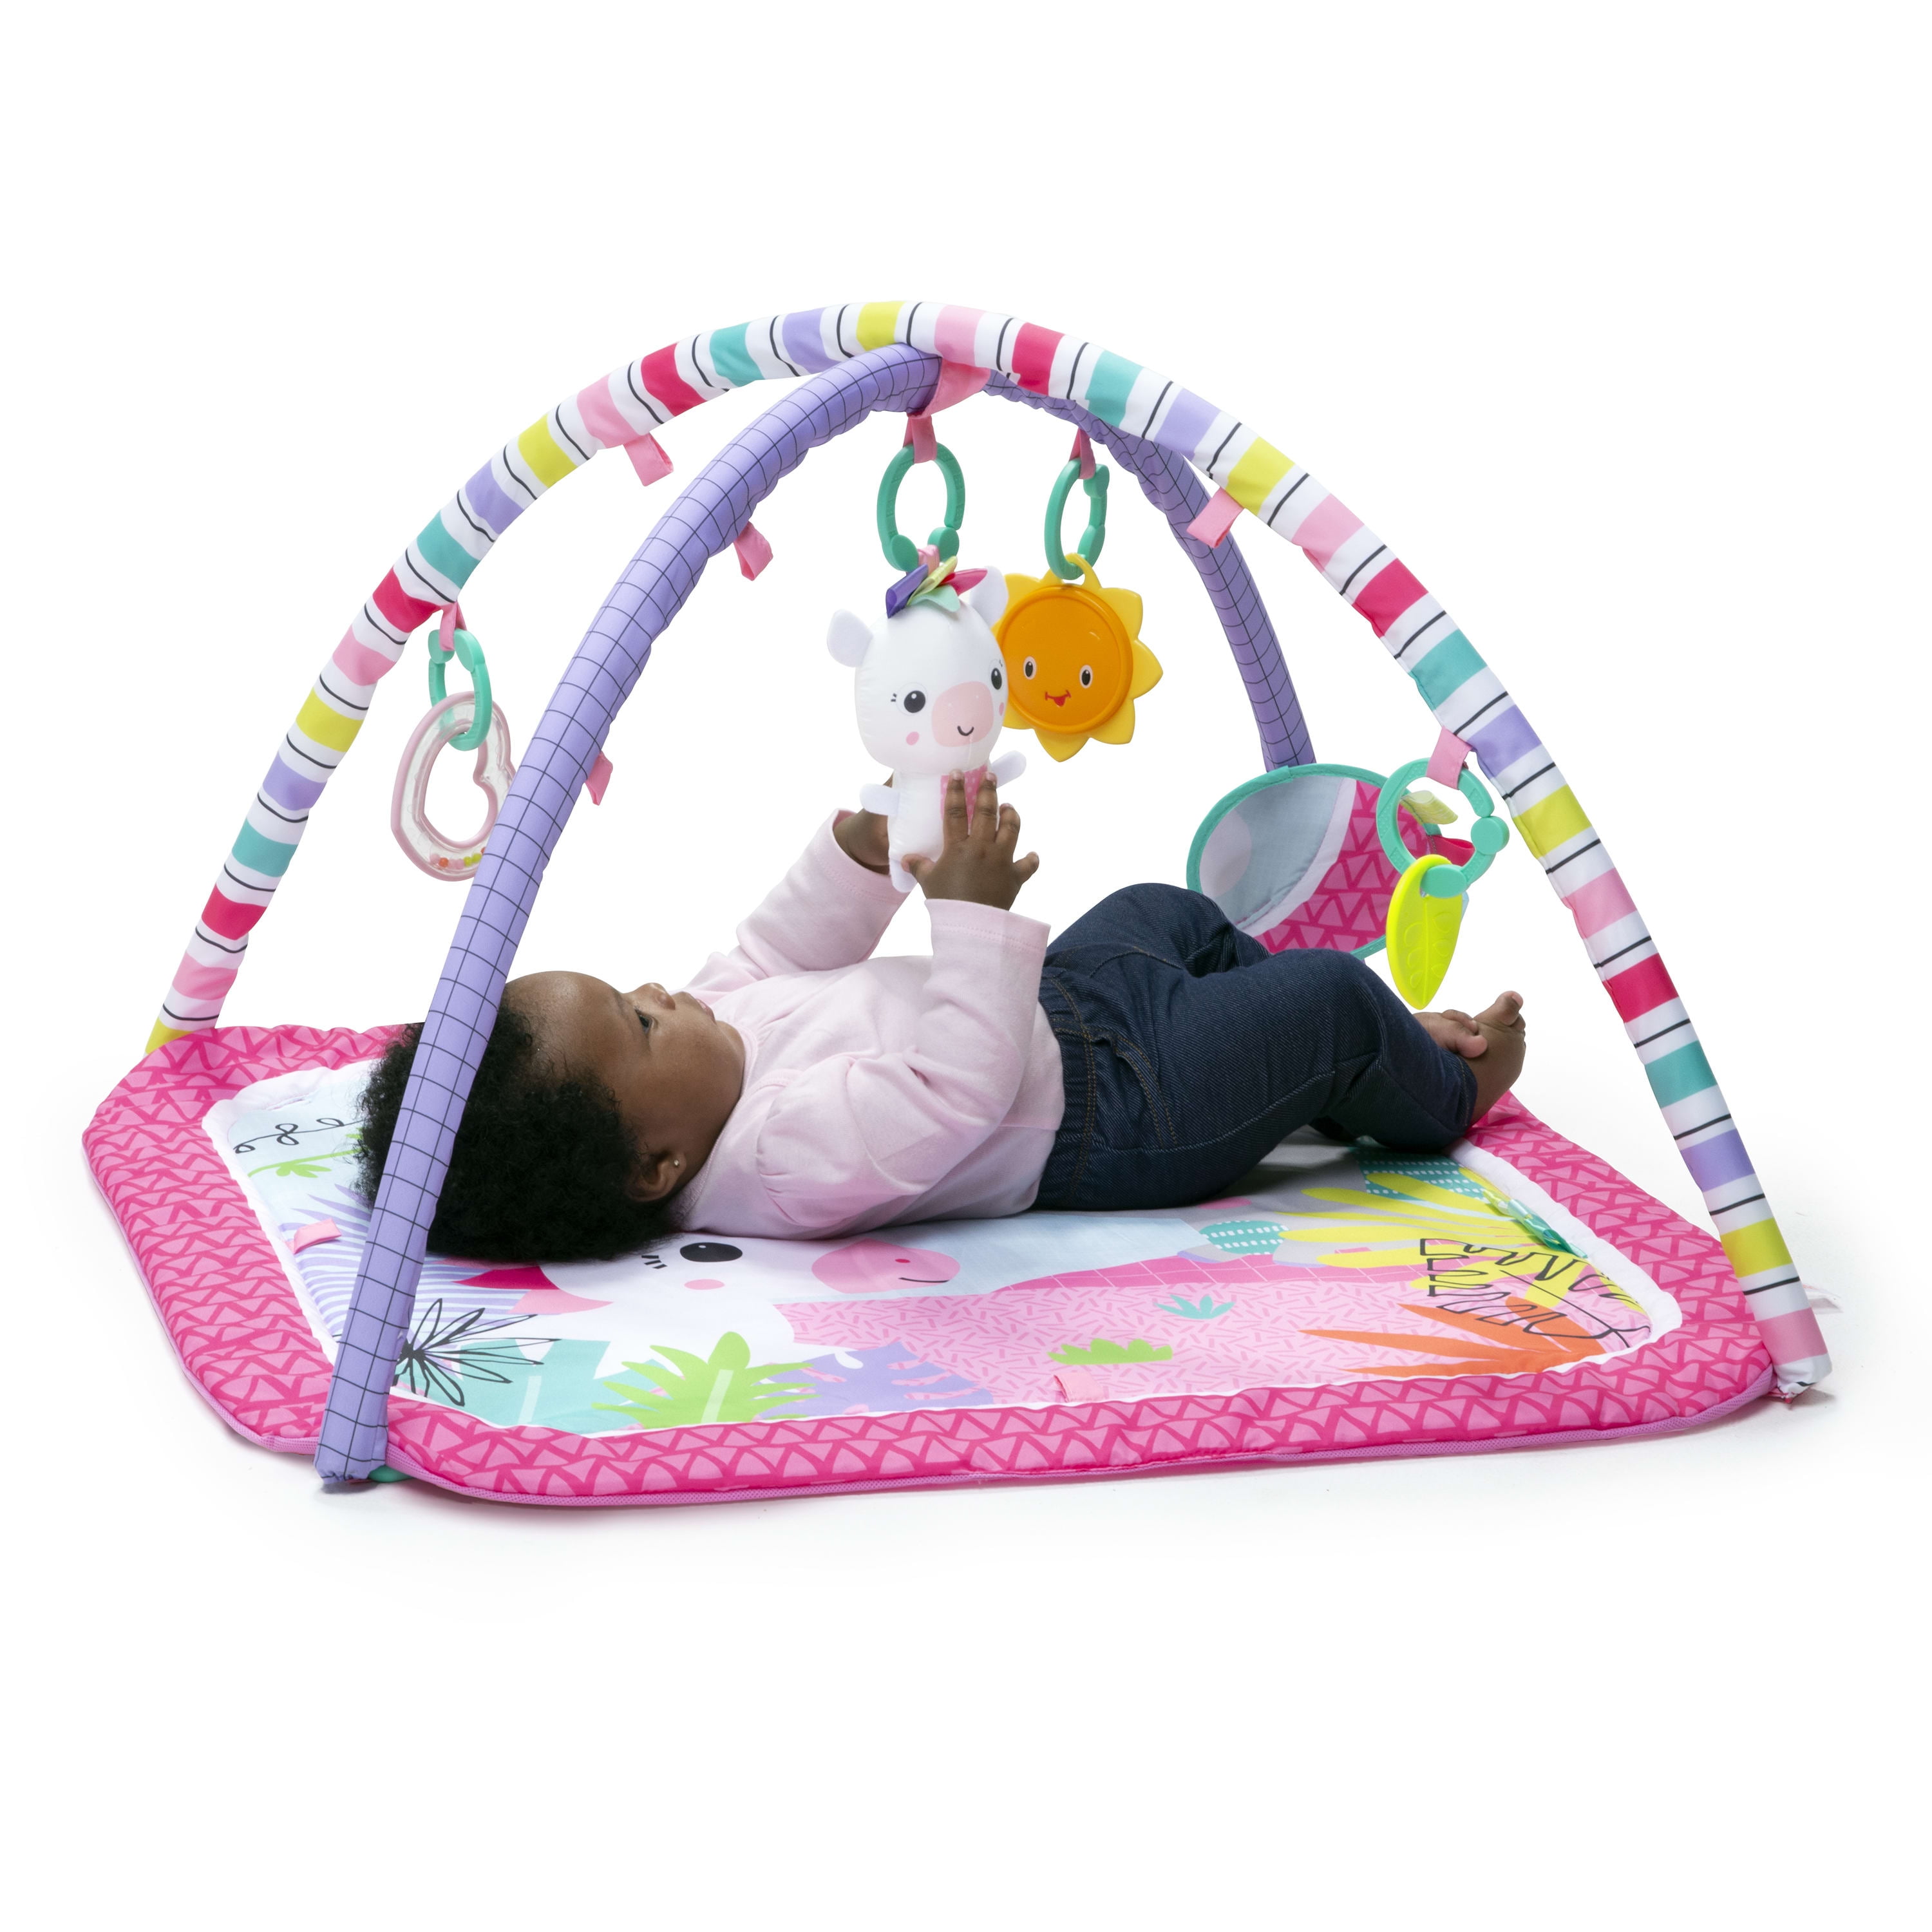 Pillow & Mirror Baby Playmat Pink Elephant Activity Play Mat W/ Fun Toys 